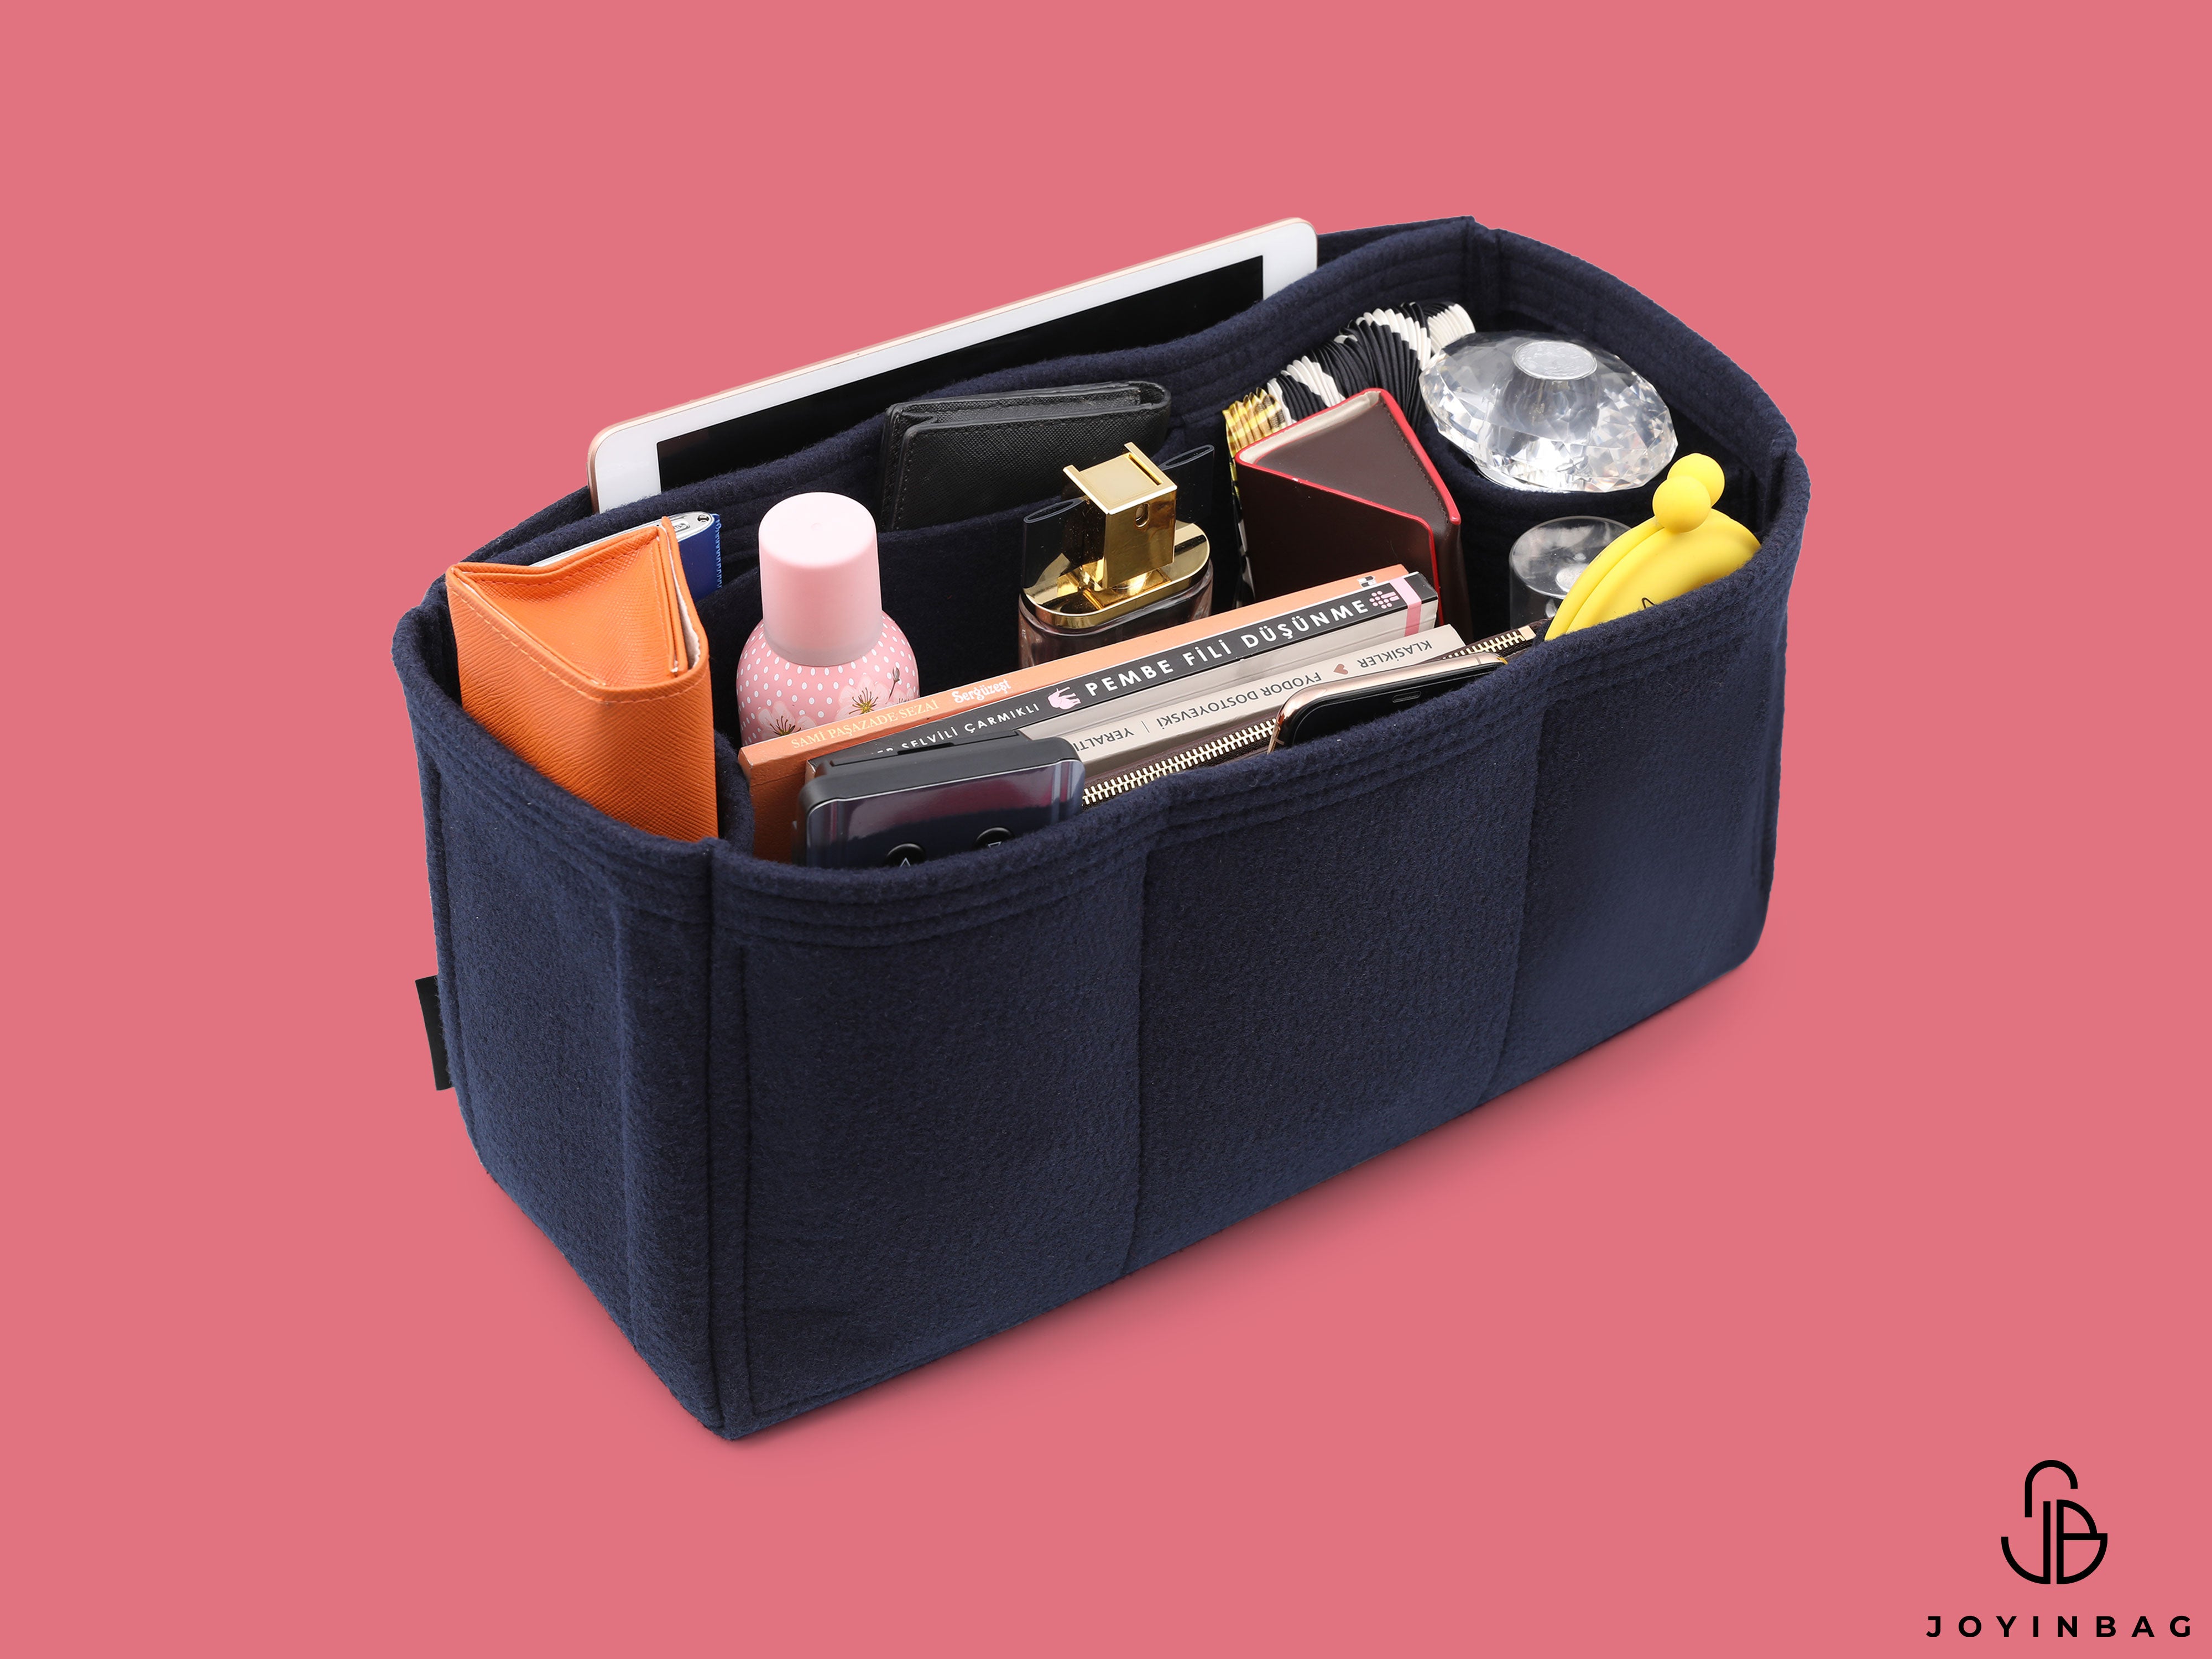 Travel Insert Felt Organizer Bag Handbag Ipad Pouch Cosmetic